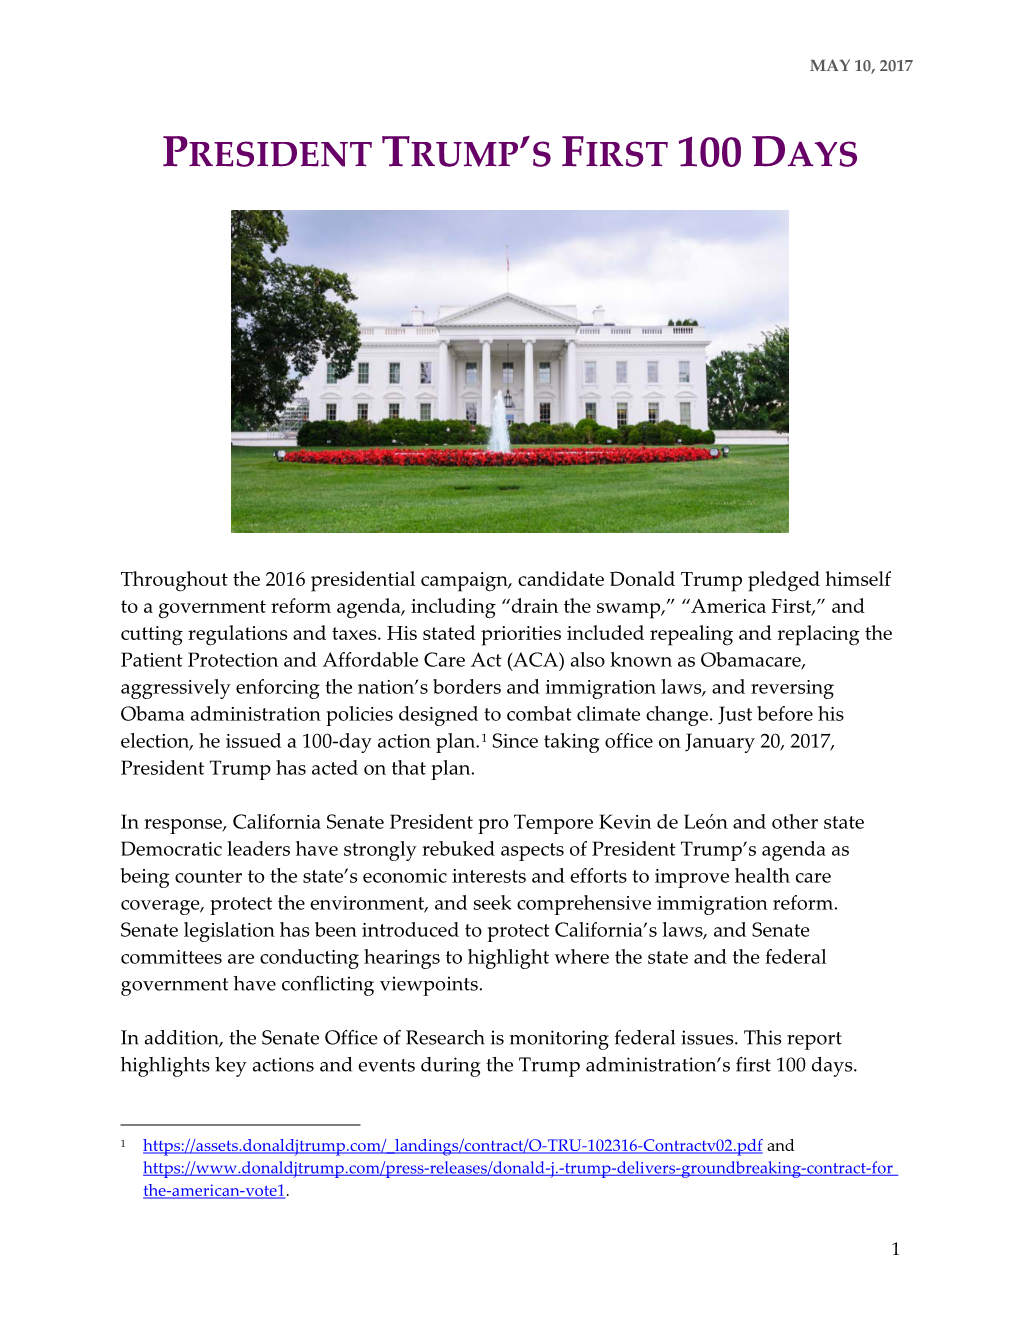 President Trump's First 100 Days